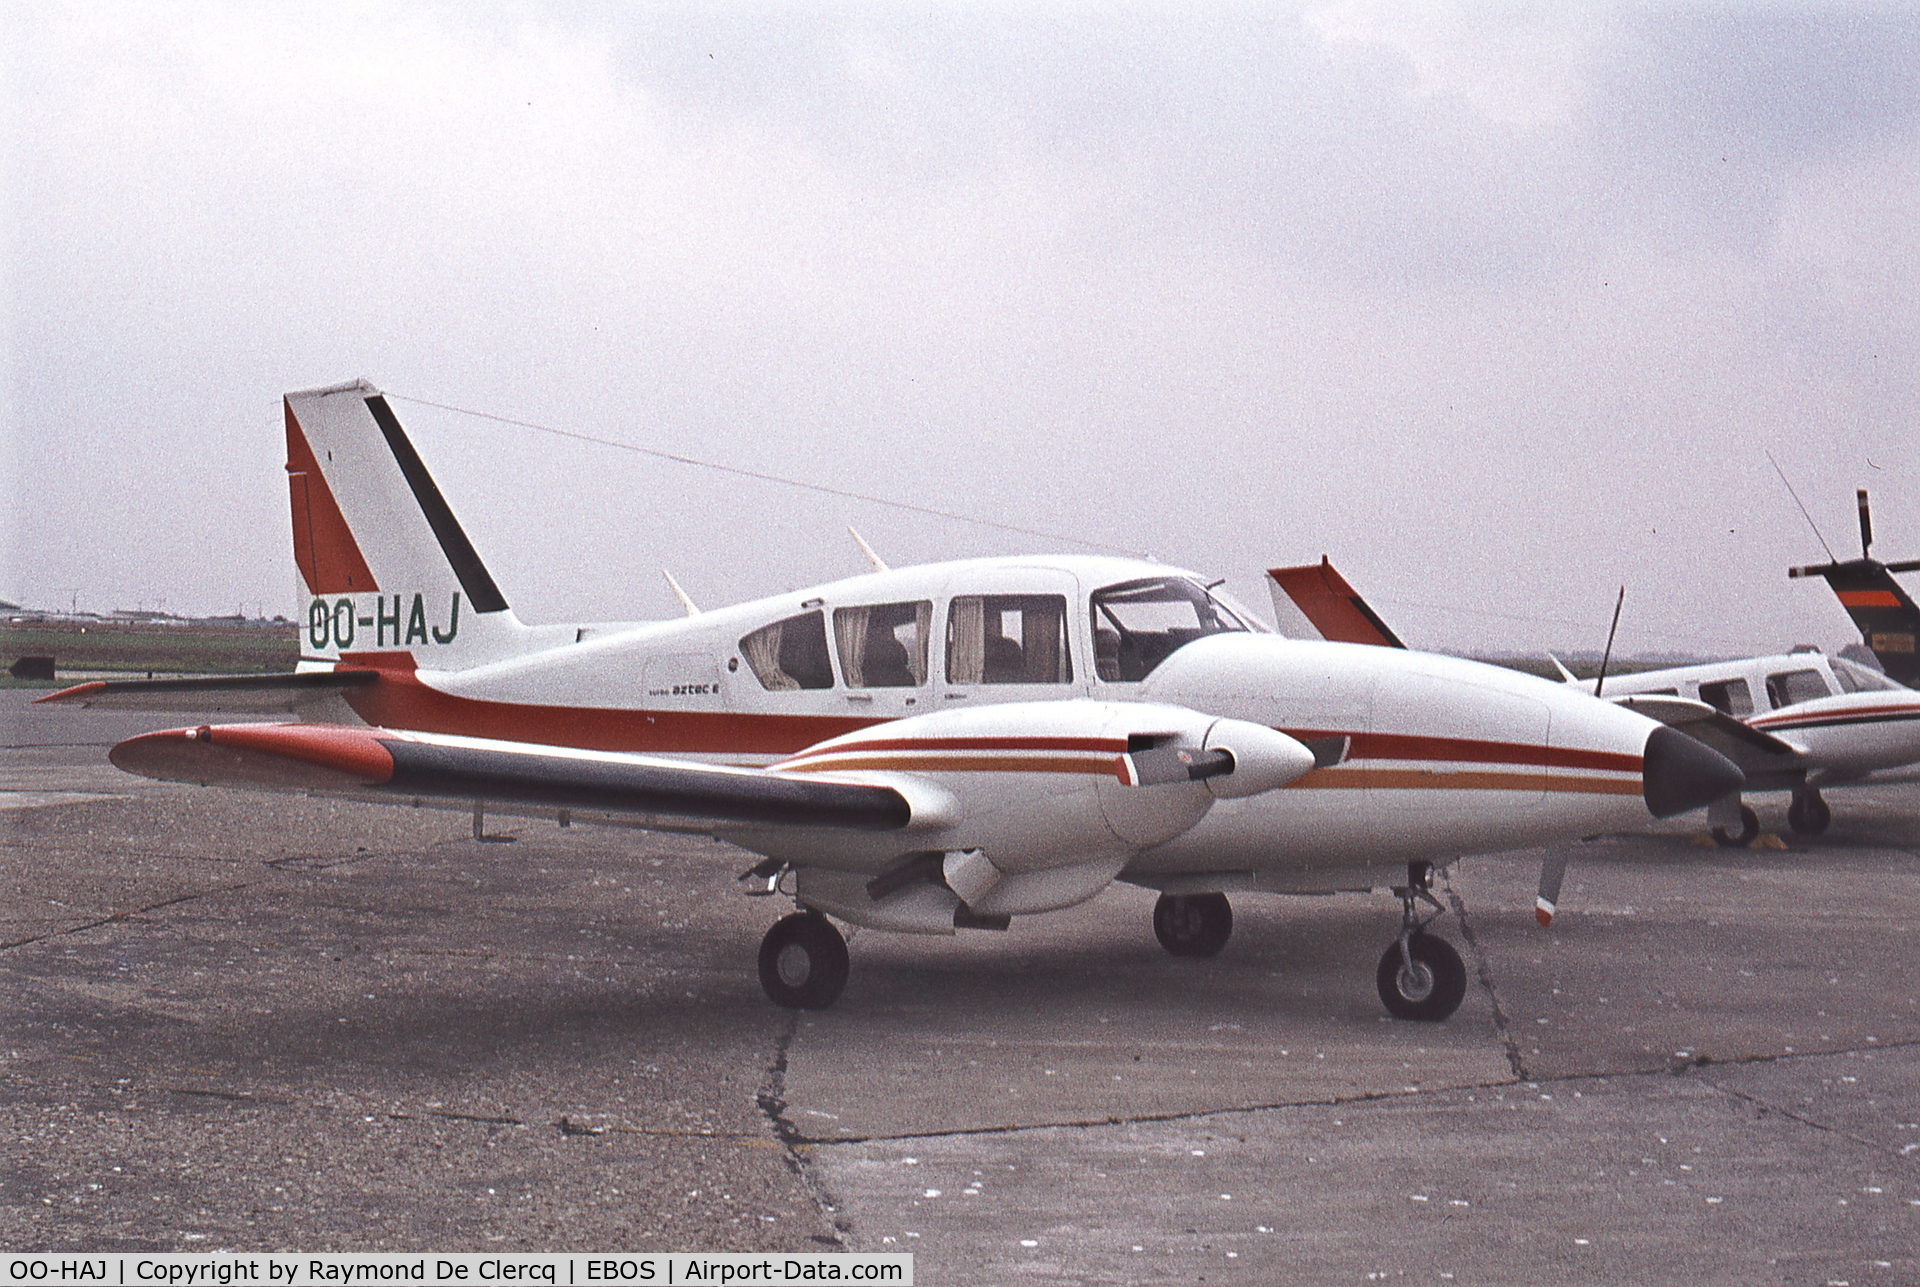 OO-HAJ, 1975 Piper PA-23-250 Turbo Aztec E C/N 27-7554022, Piper PA-23-250 Turbo Aztec E